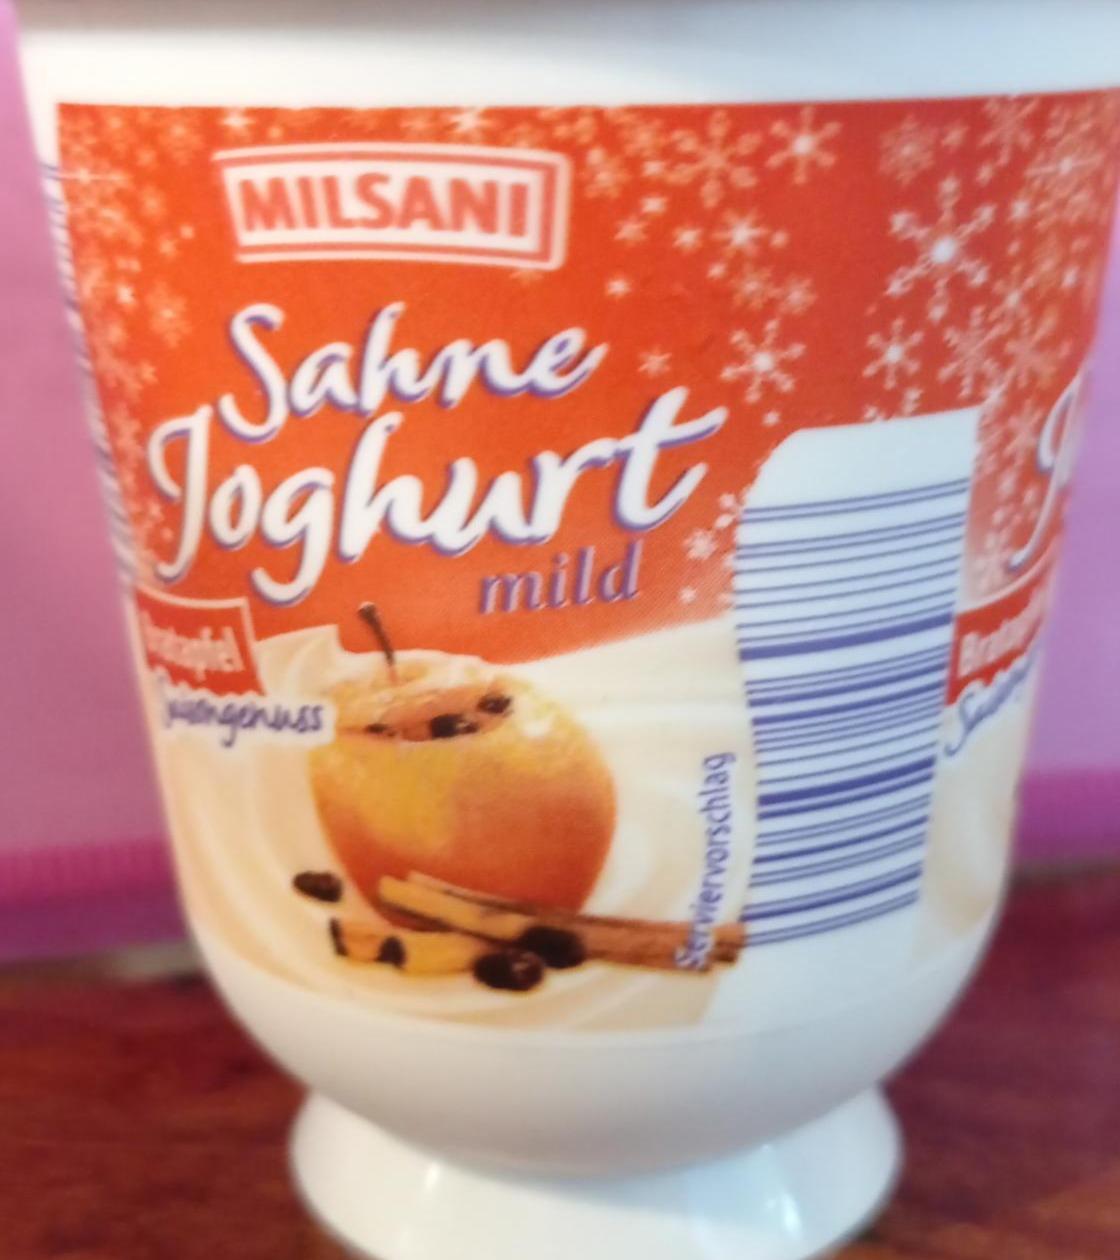 Fotografie - Sahne Jogurt Bratapfel mild Milsani